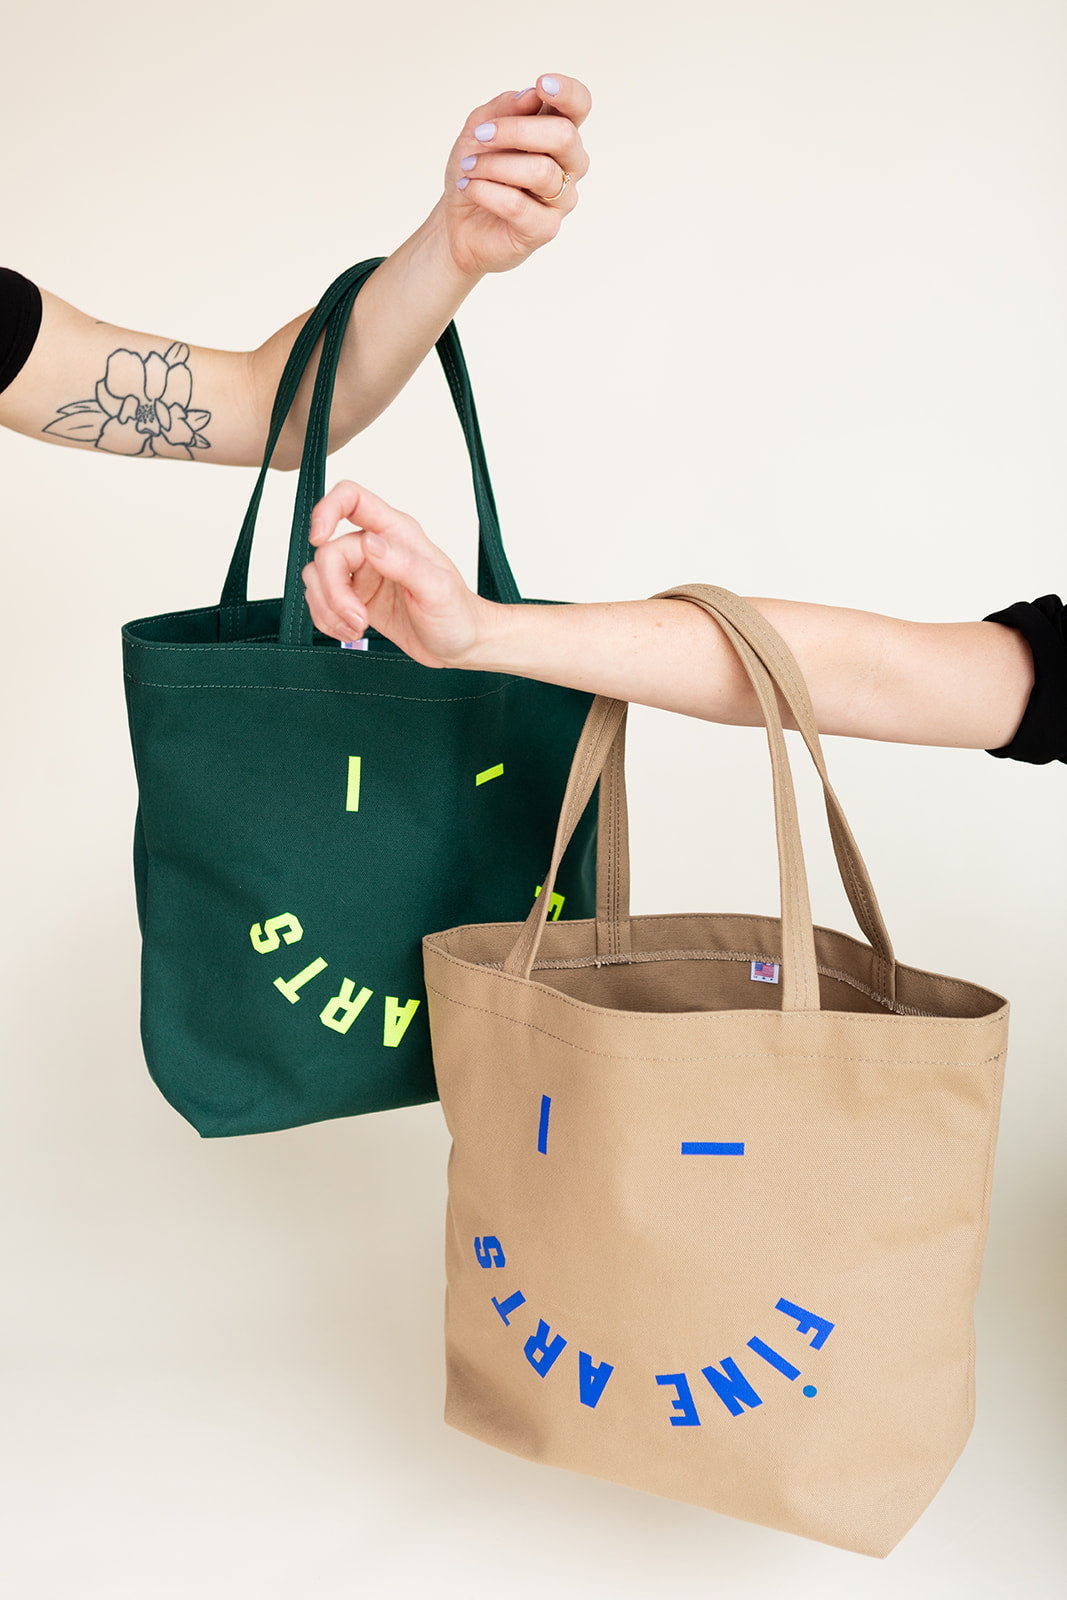 Foxy- Fine Art Tote bag | Mobile Art School